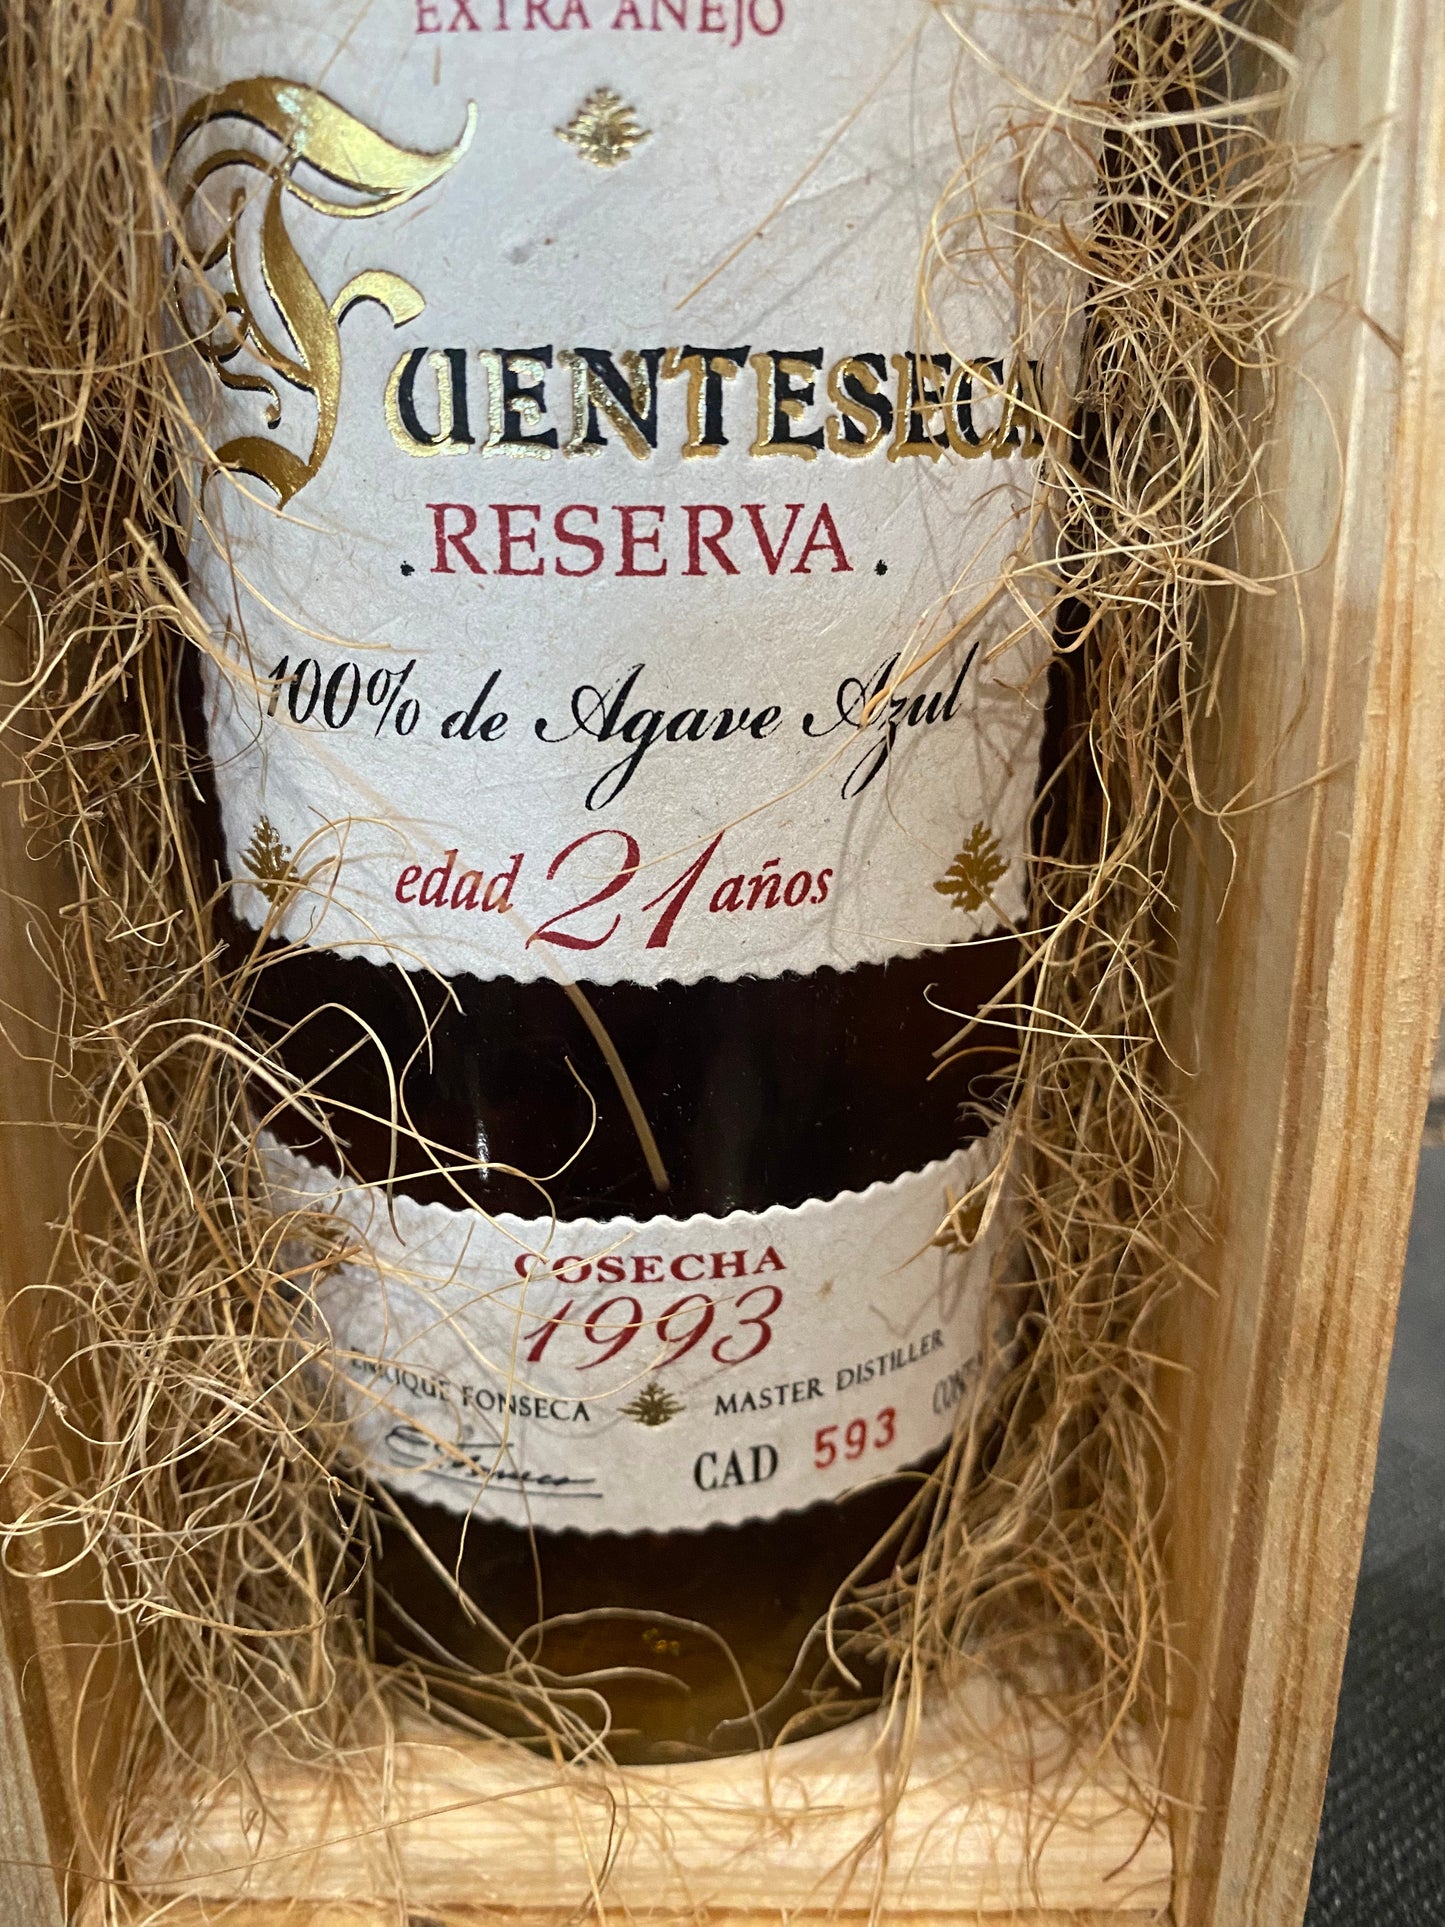 1993 Fuenteseca Reserva 21 Year Extra Anejo Tequila 750ml